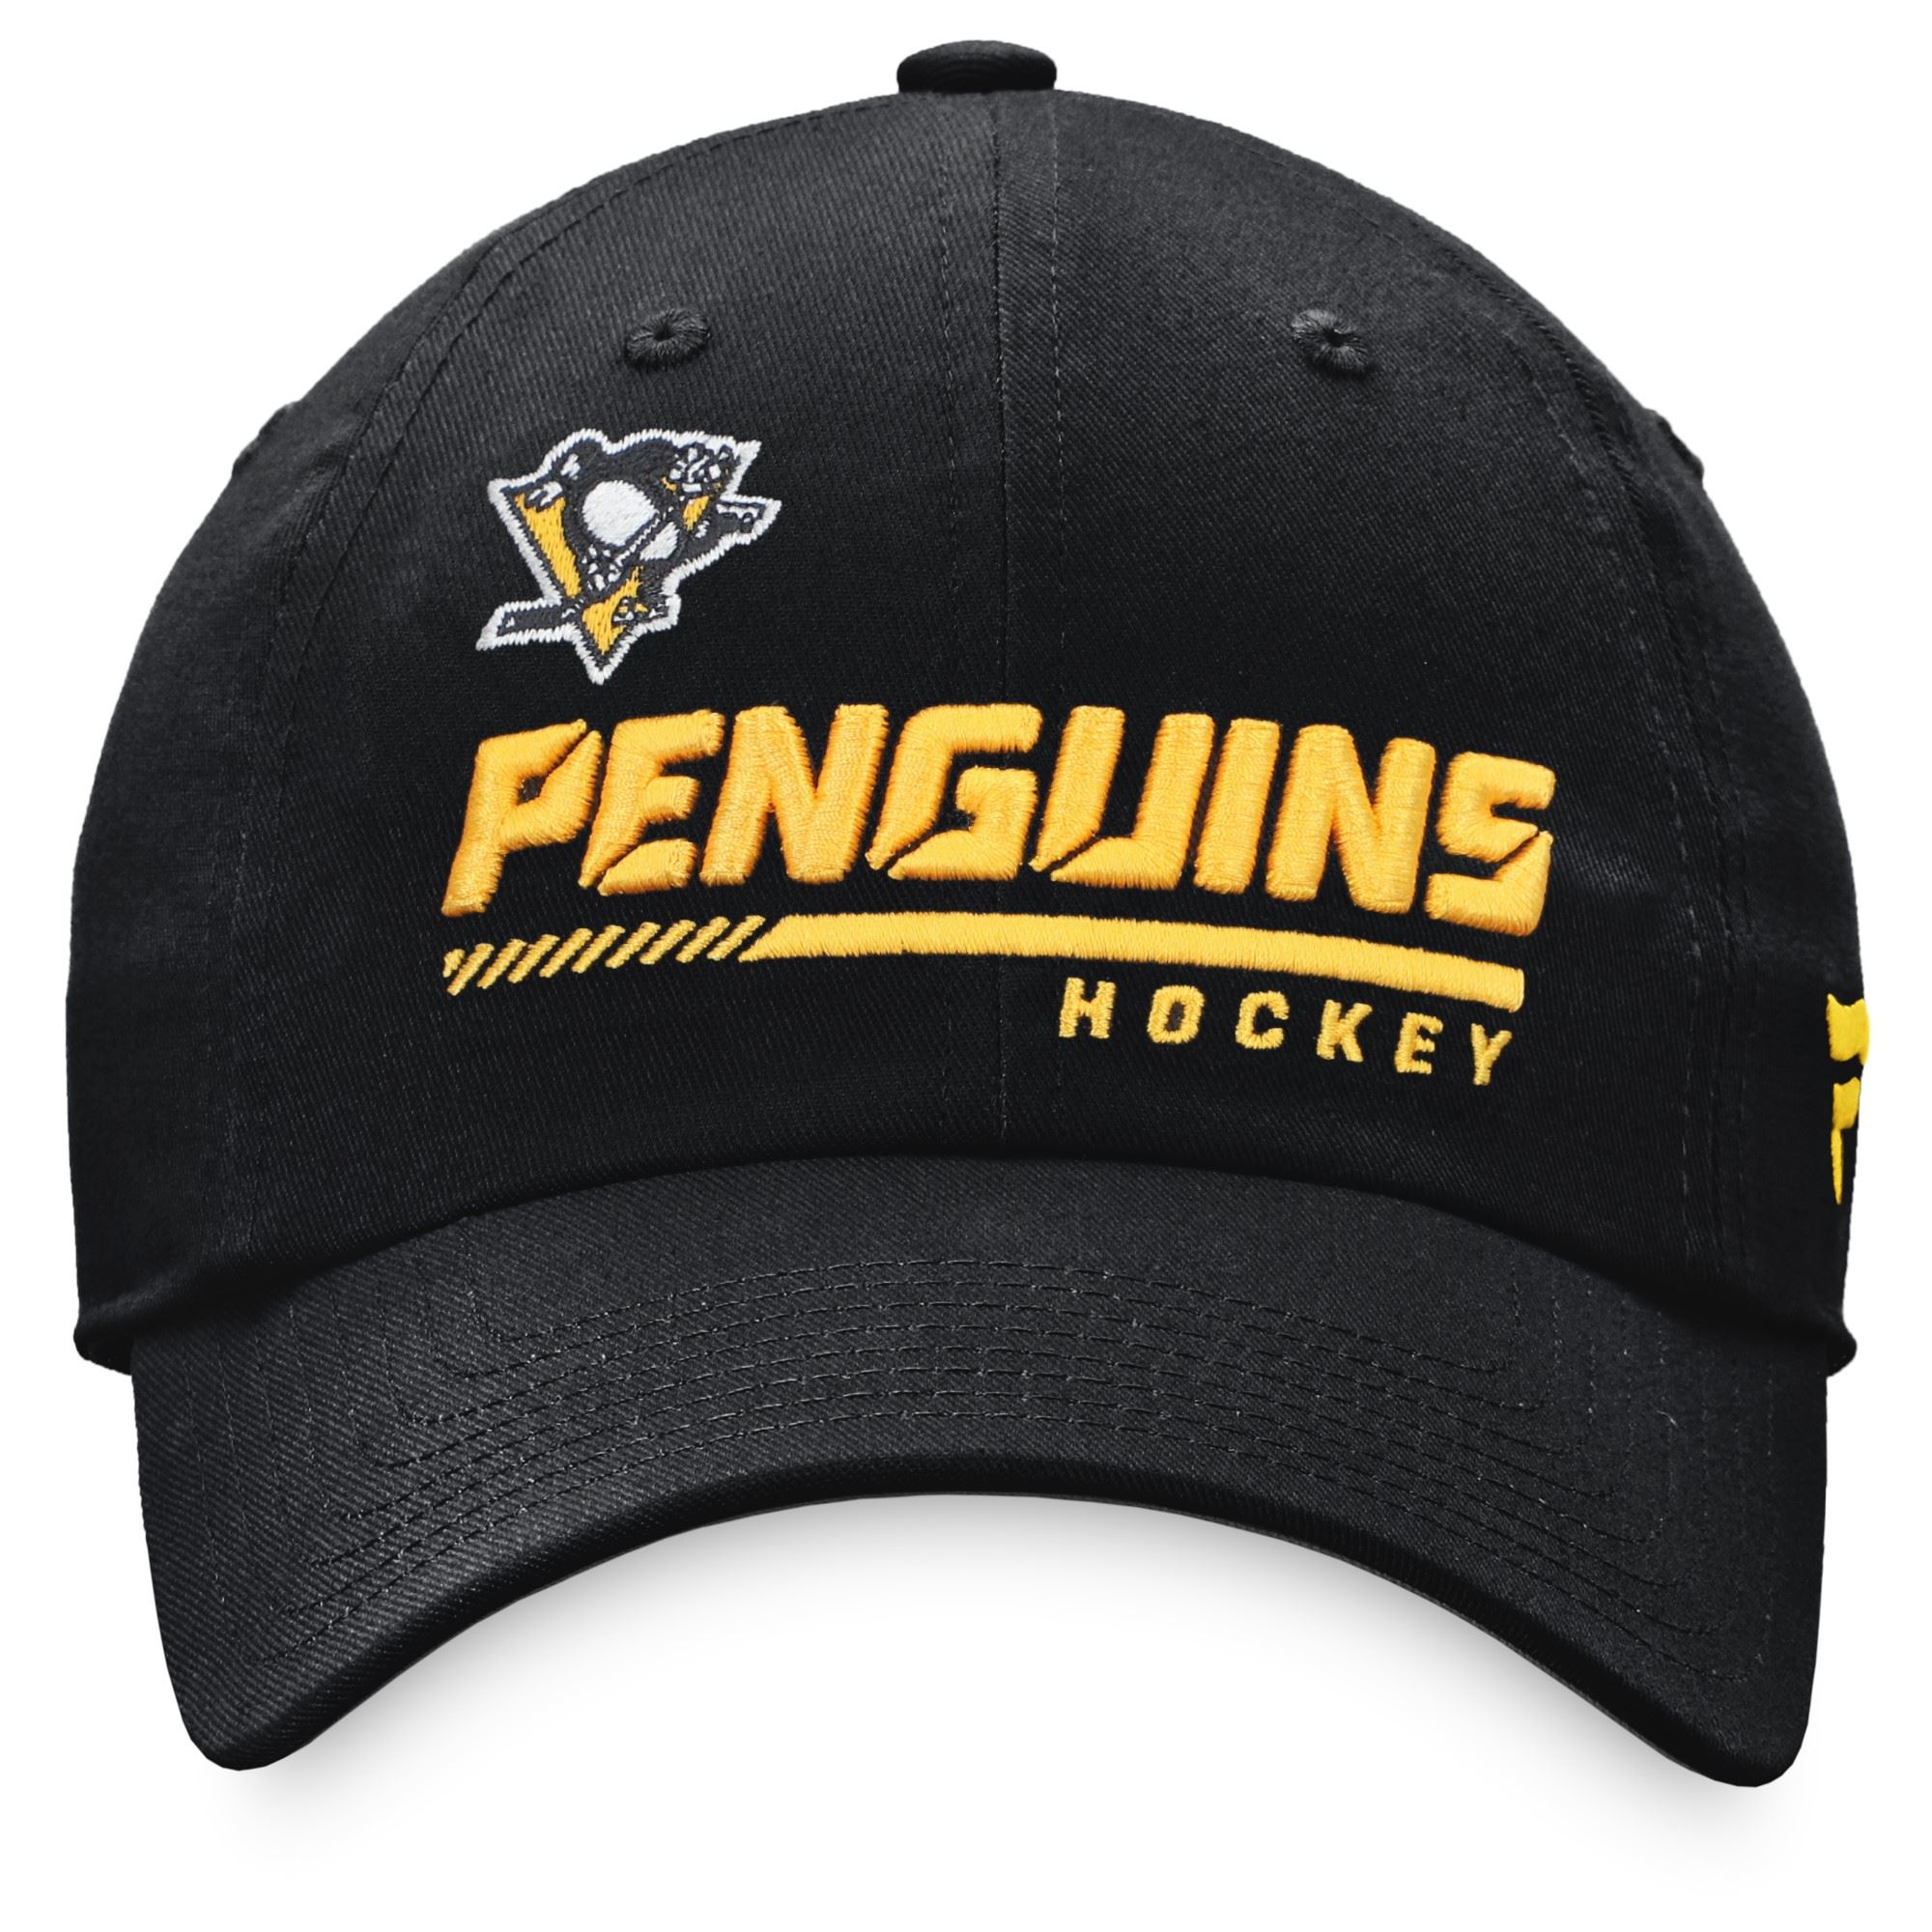 Pittsburgh Penguins NHL Authentic Pro Locker Room Curved Unstructured Strapback Cap Black  Fanatics